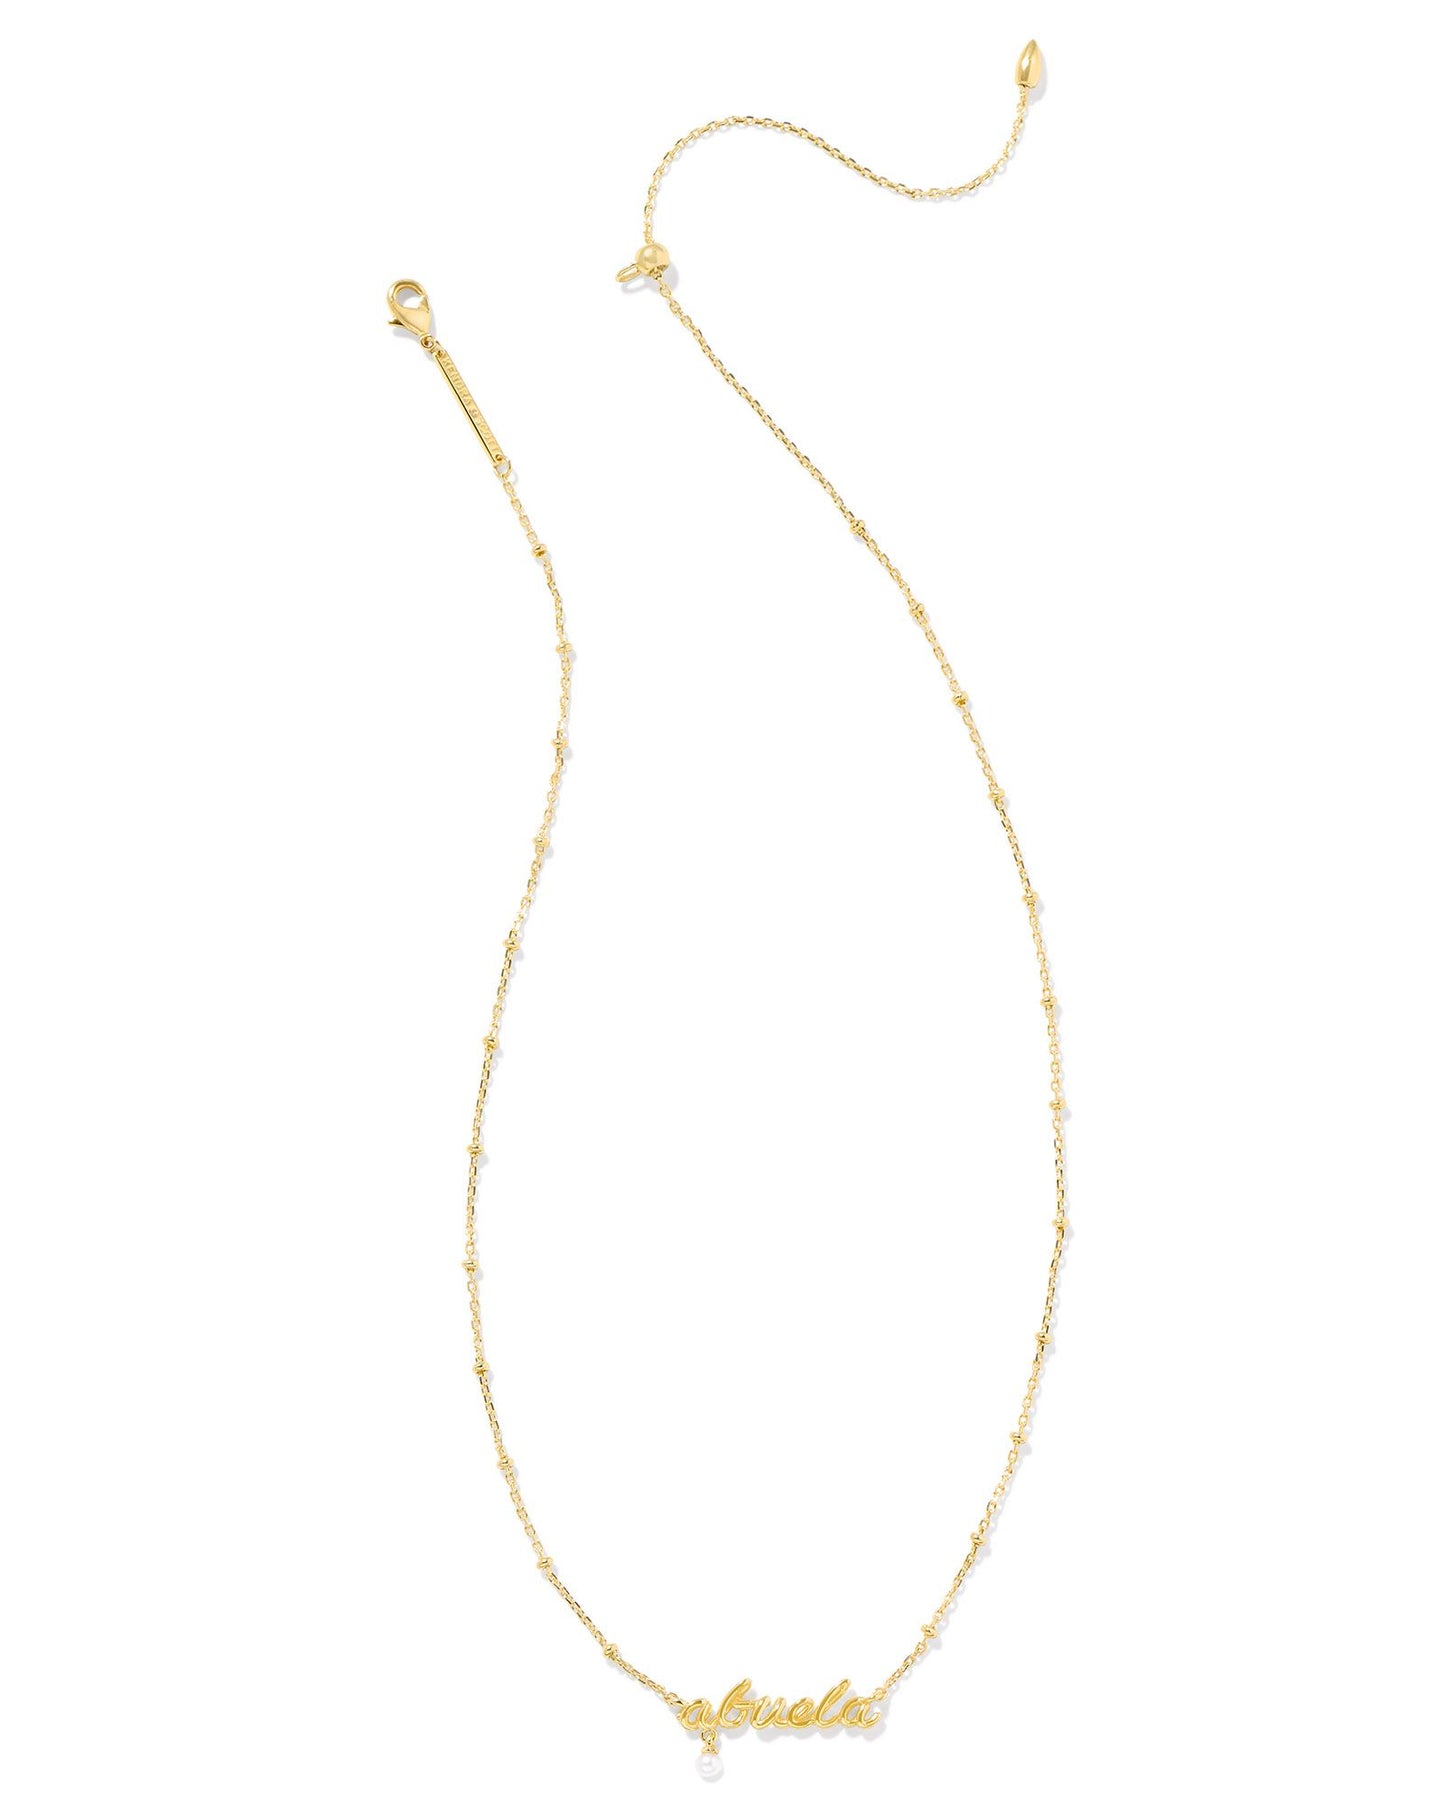 Abuela Script Pendant Necklace in Gold White Pearl